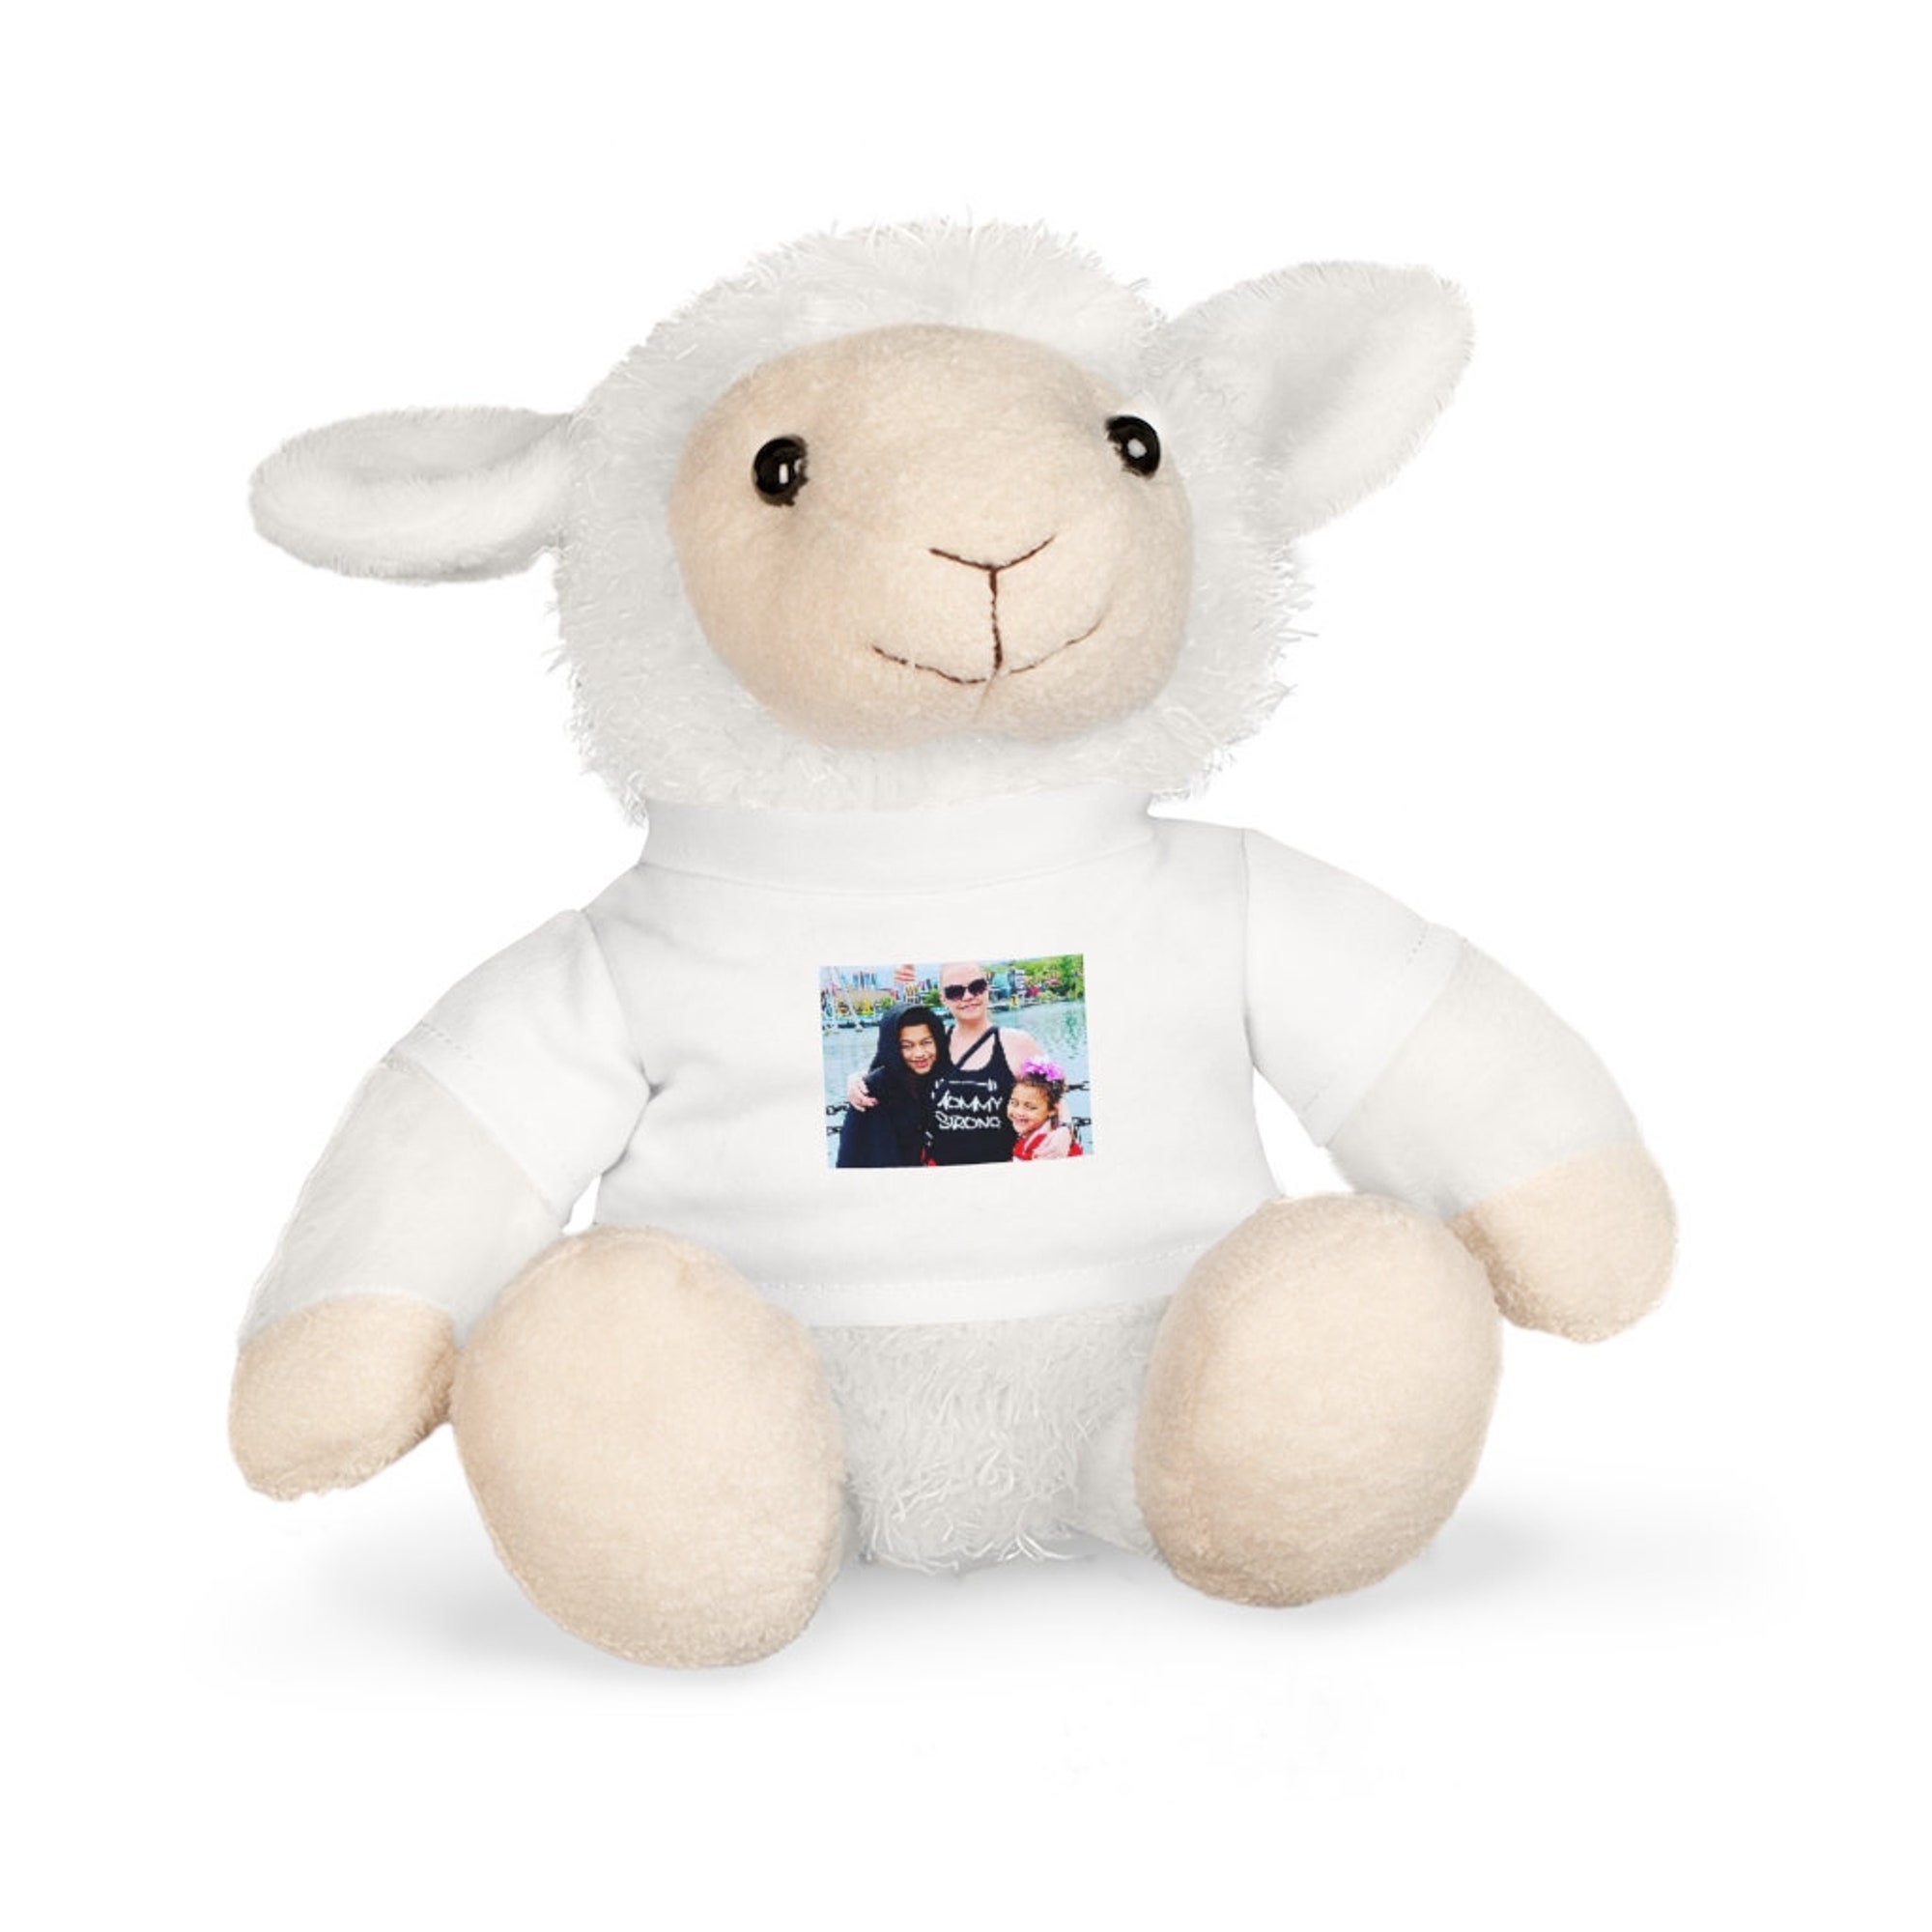 Personalized photo plush Sheep with T-shirt, Sheep, custom stuffed animal, personalized gifts